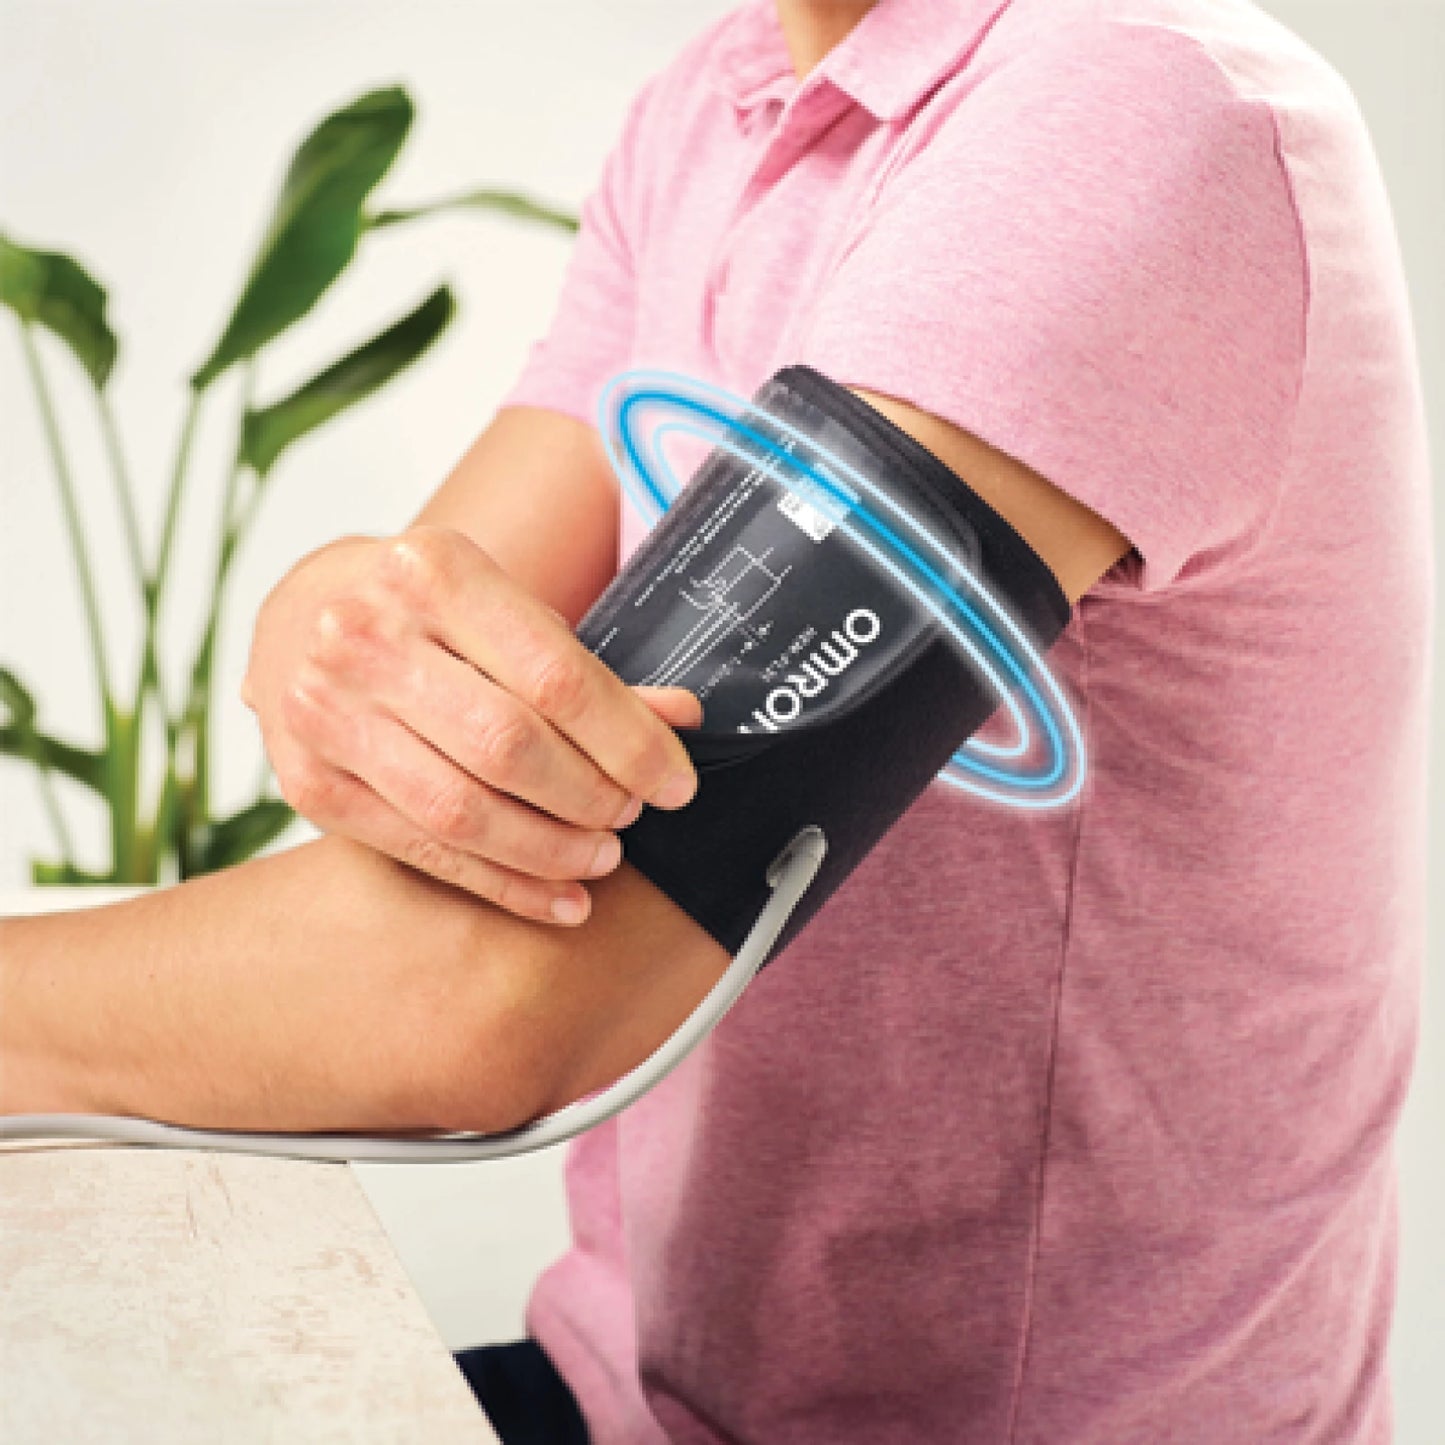 Omron M3 Comfort - Upper Arm Blood Pressure Monitor